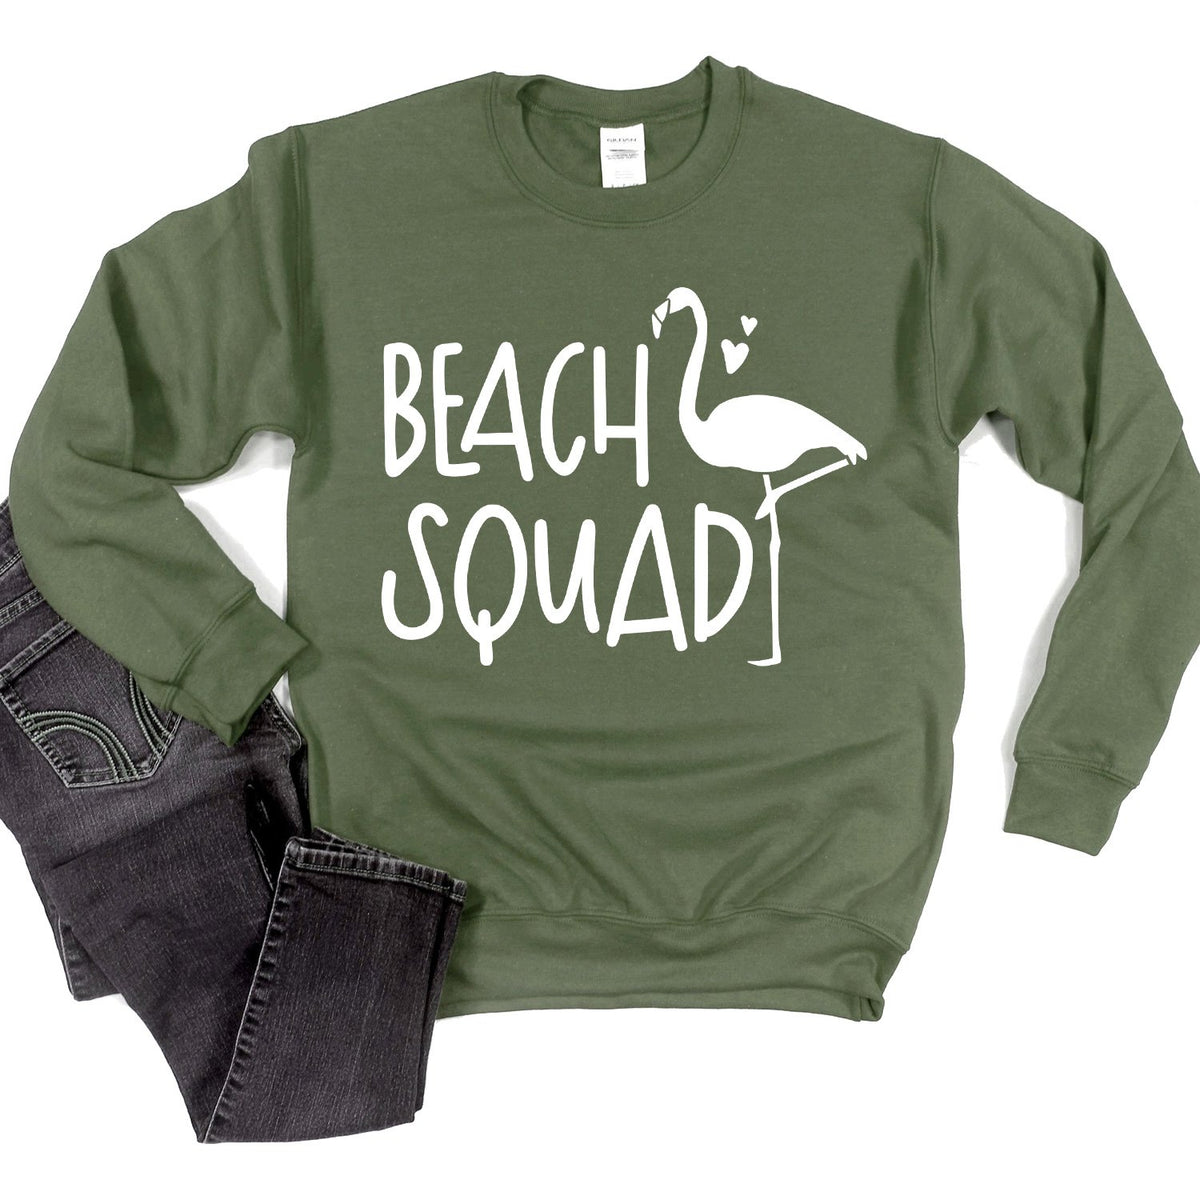 Beach Squad with Swan - Long Sleeve Heavy Crewneck Sweatshirt